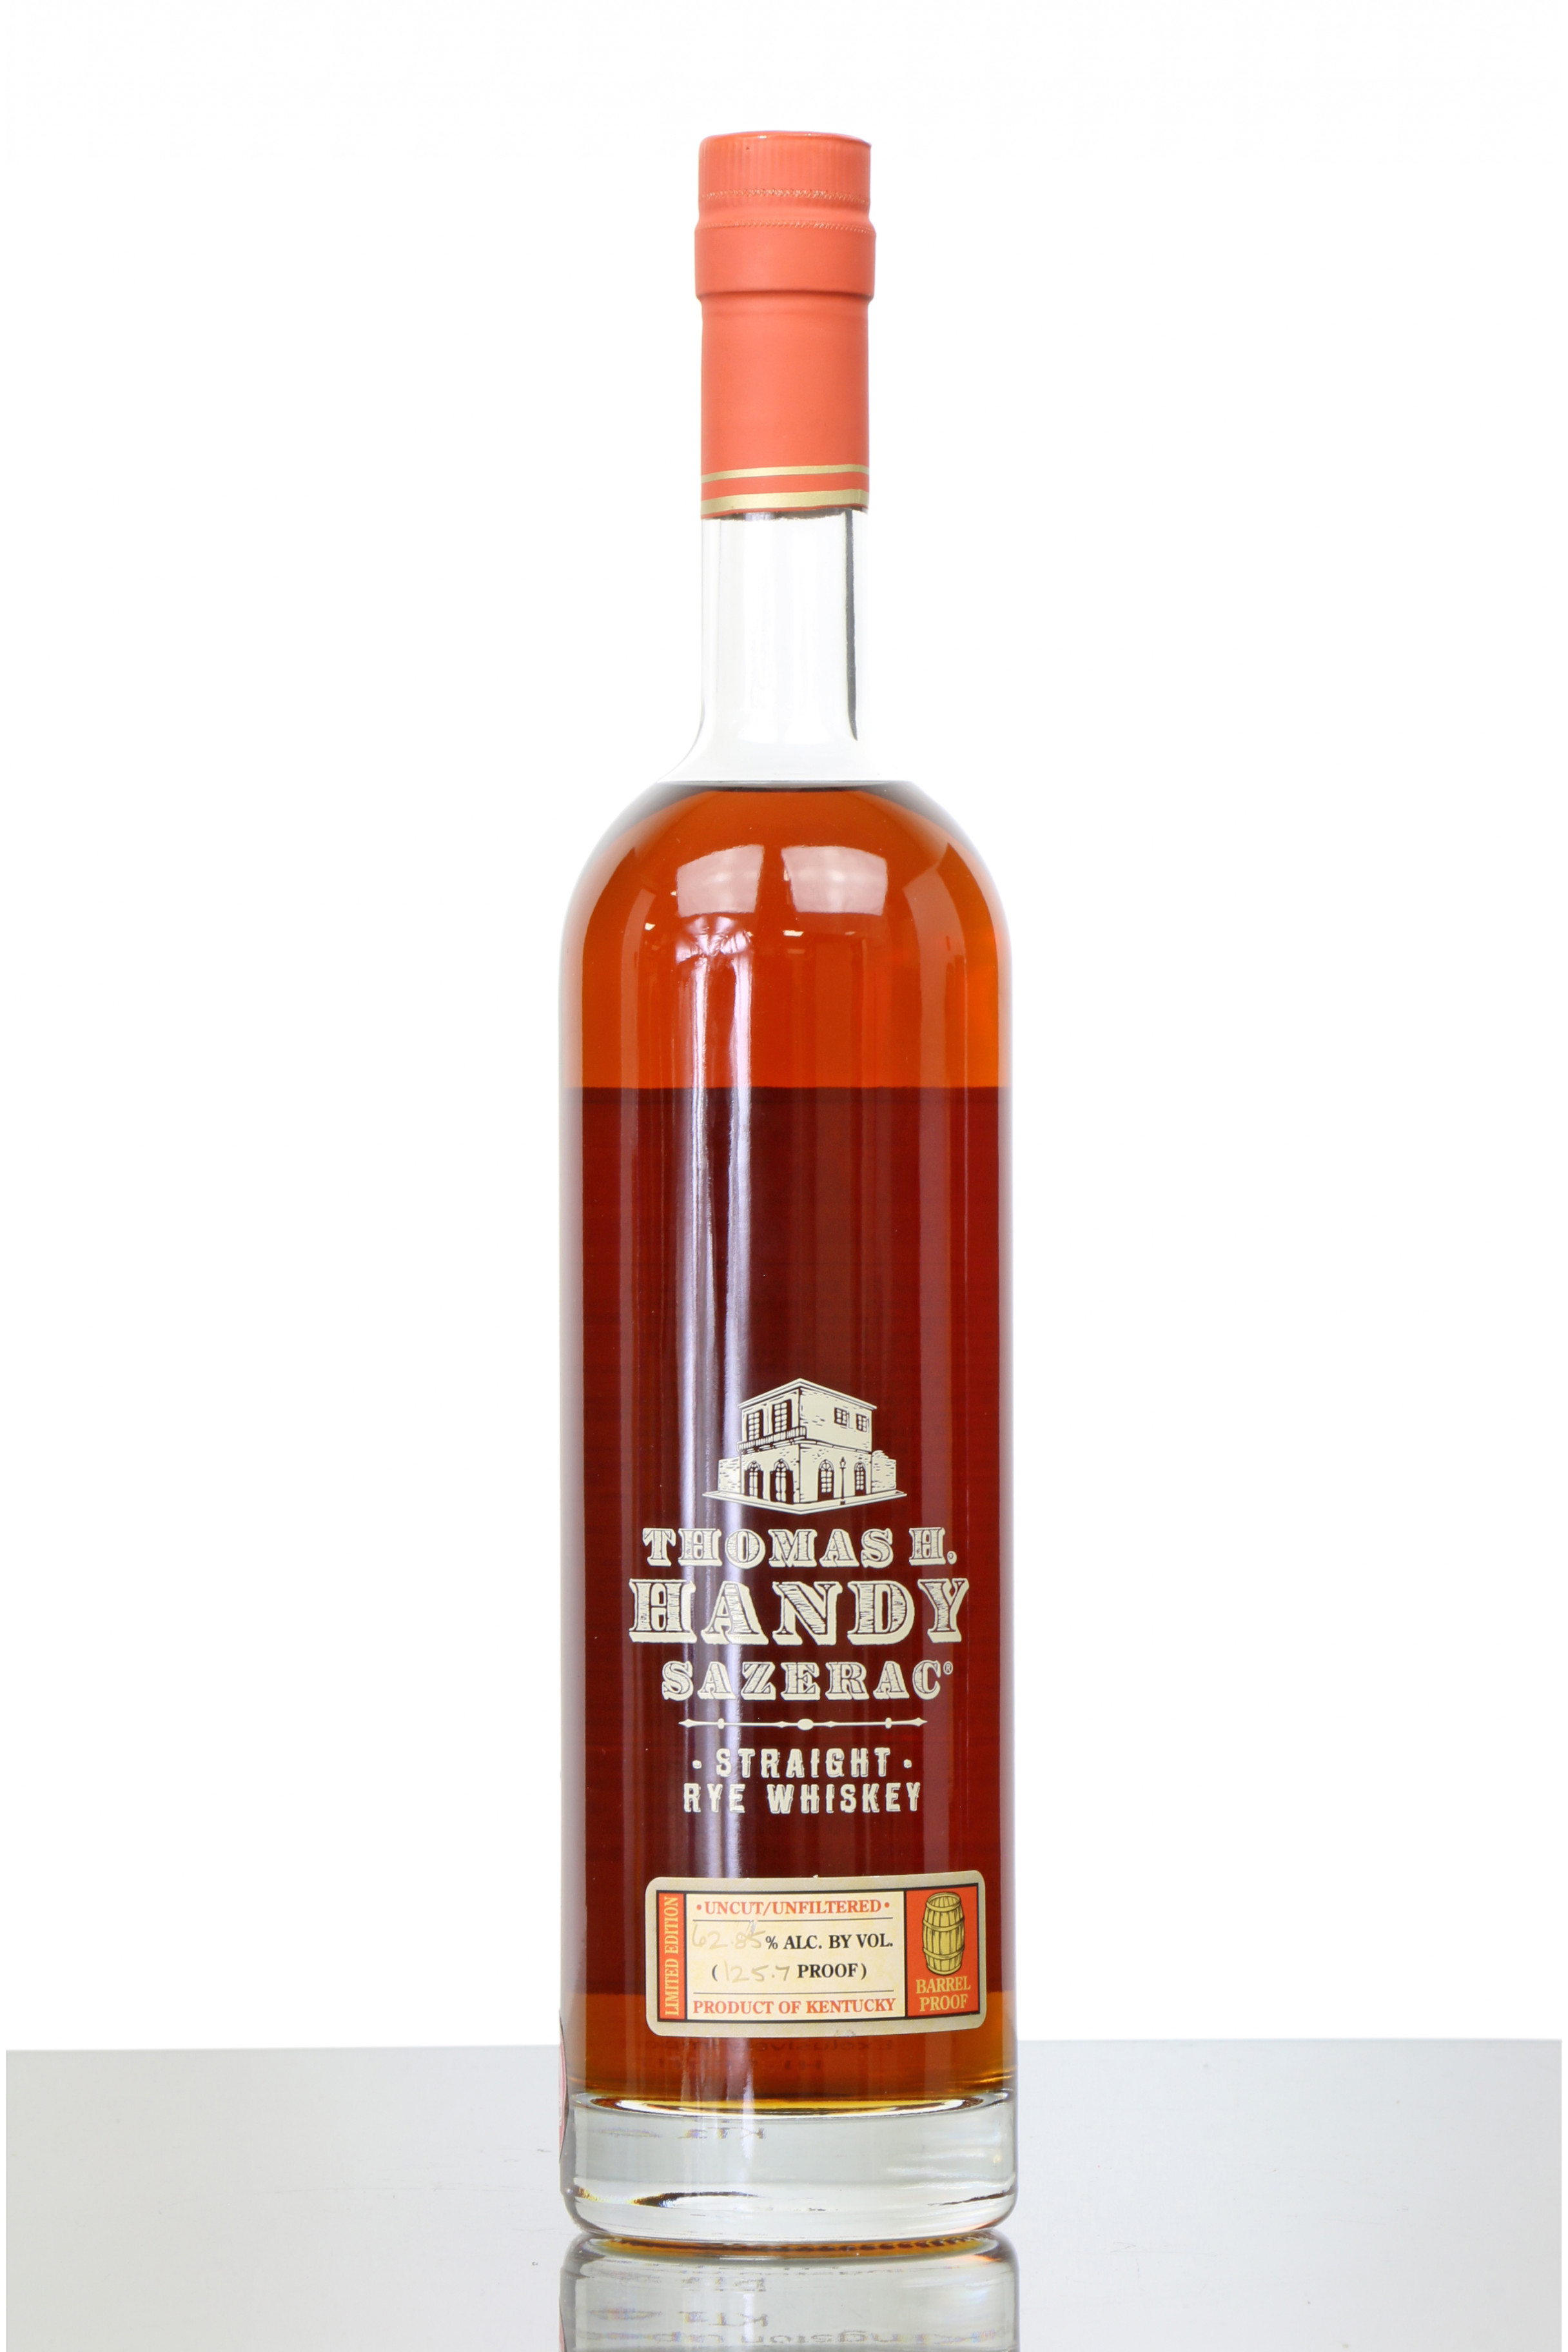 Thomas H. Handy Sazerac Rye Whiskey 2019 Barrel Proof (62.85) Just